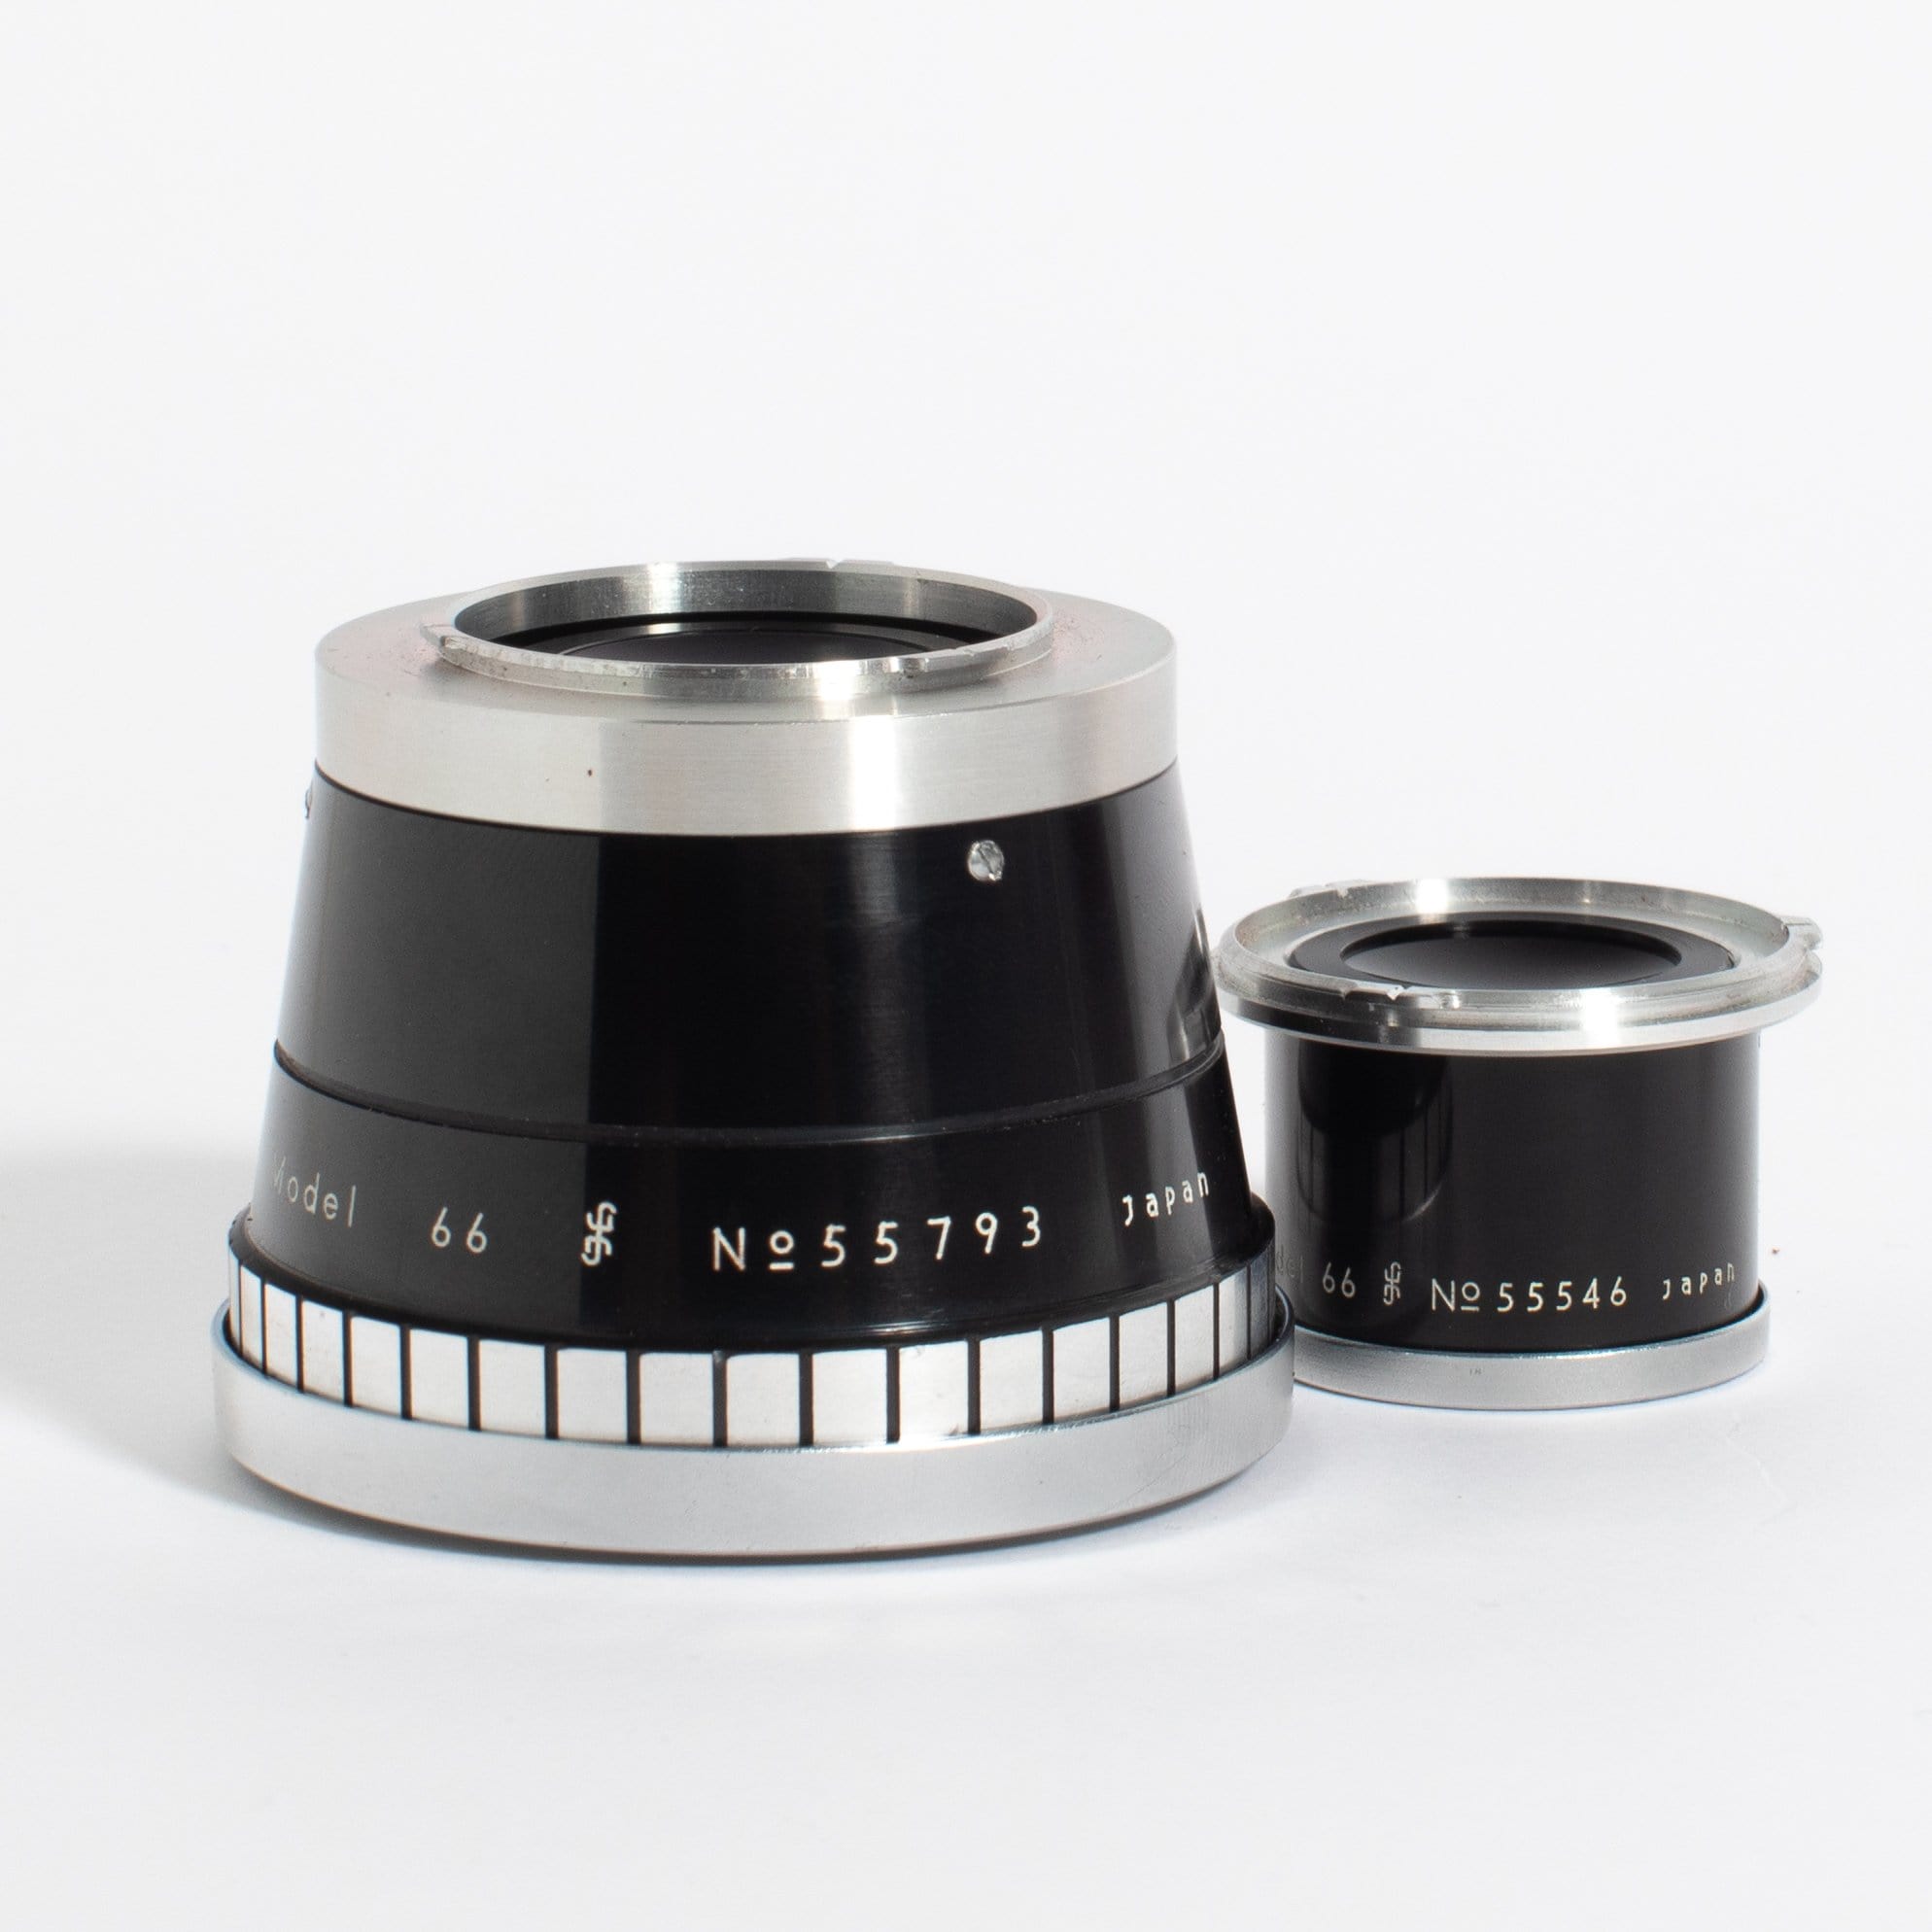 RolleiFlex zeiss-opton tessar 75mm f3,5フィルムカメラ